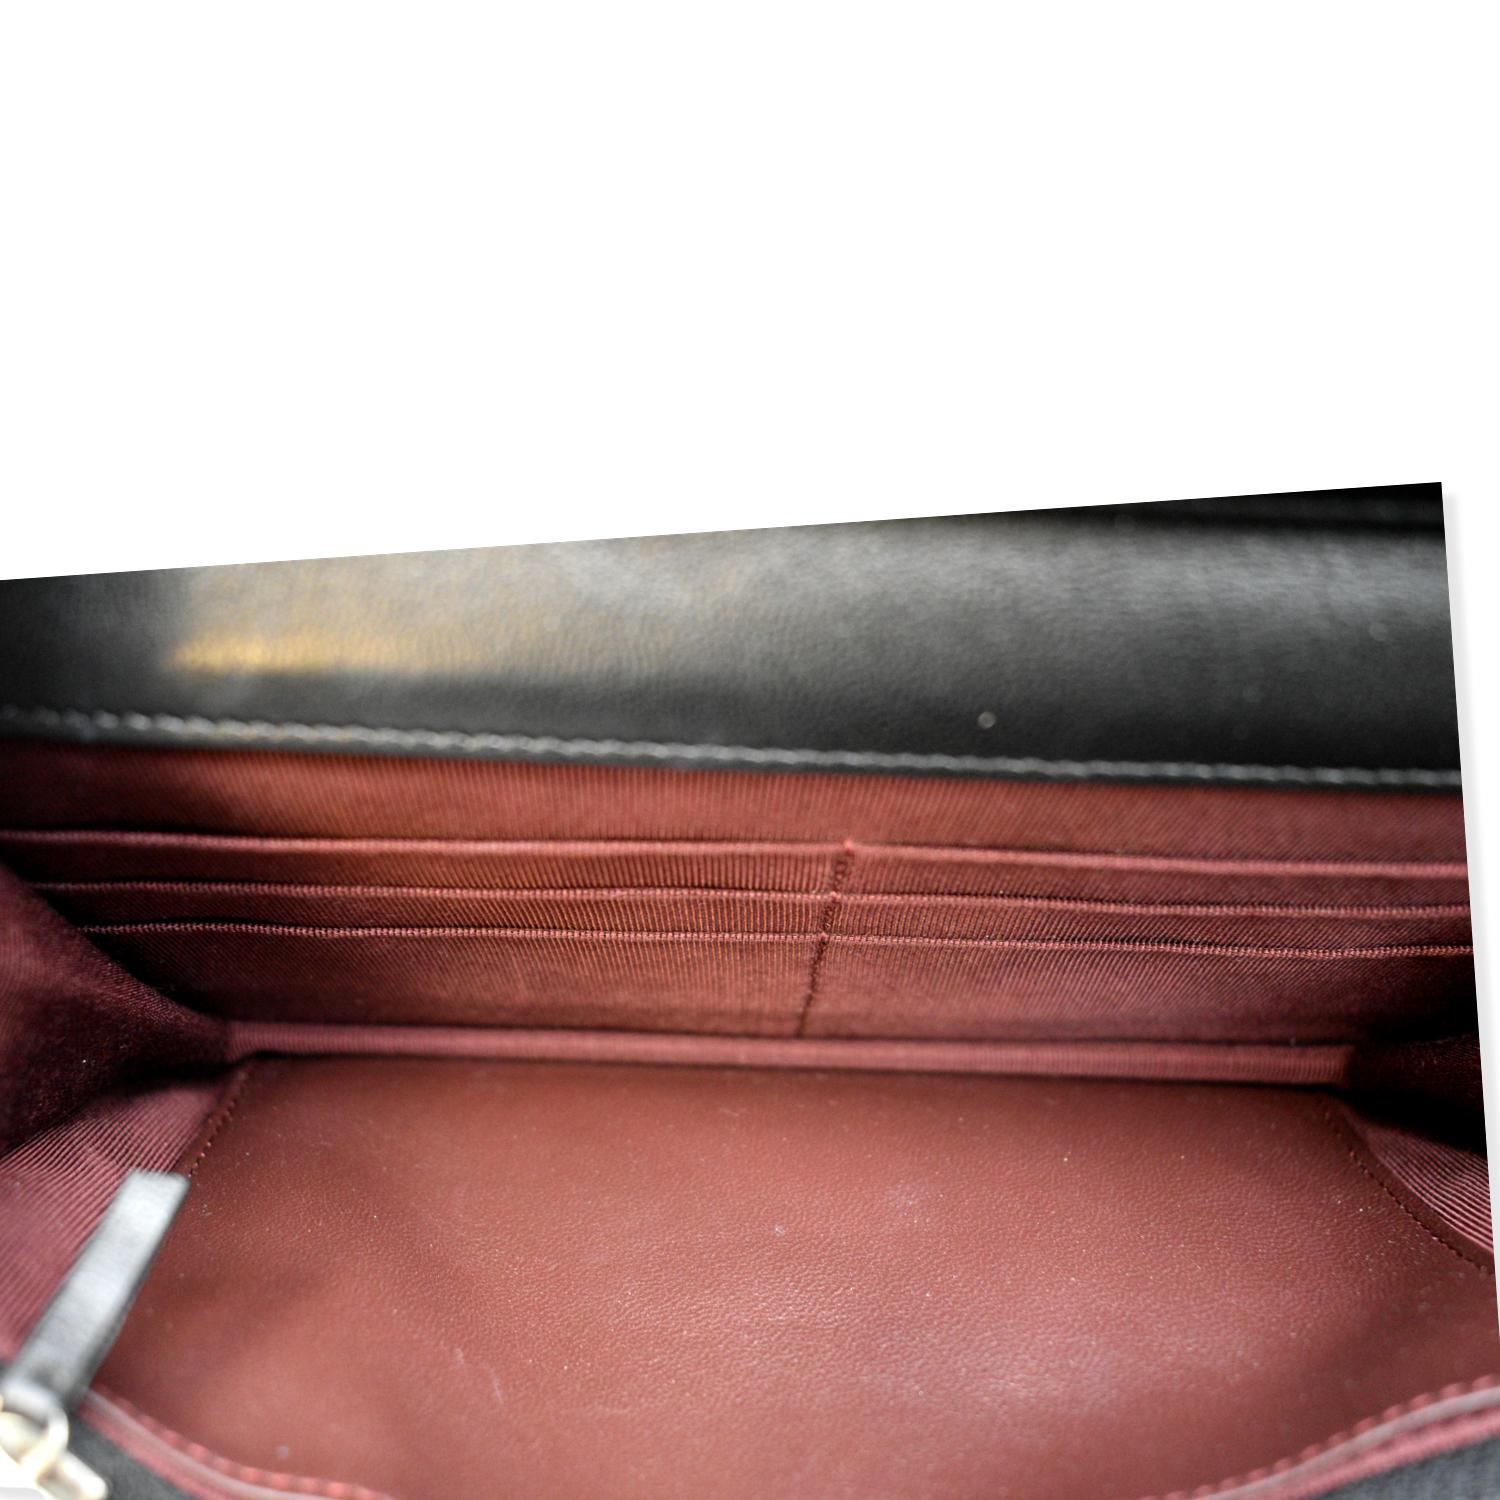 CHANEL Wallet On Chain Lambskin Leather WOC Crossbody Bag